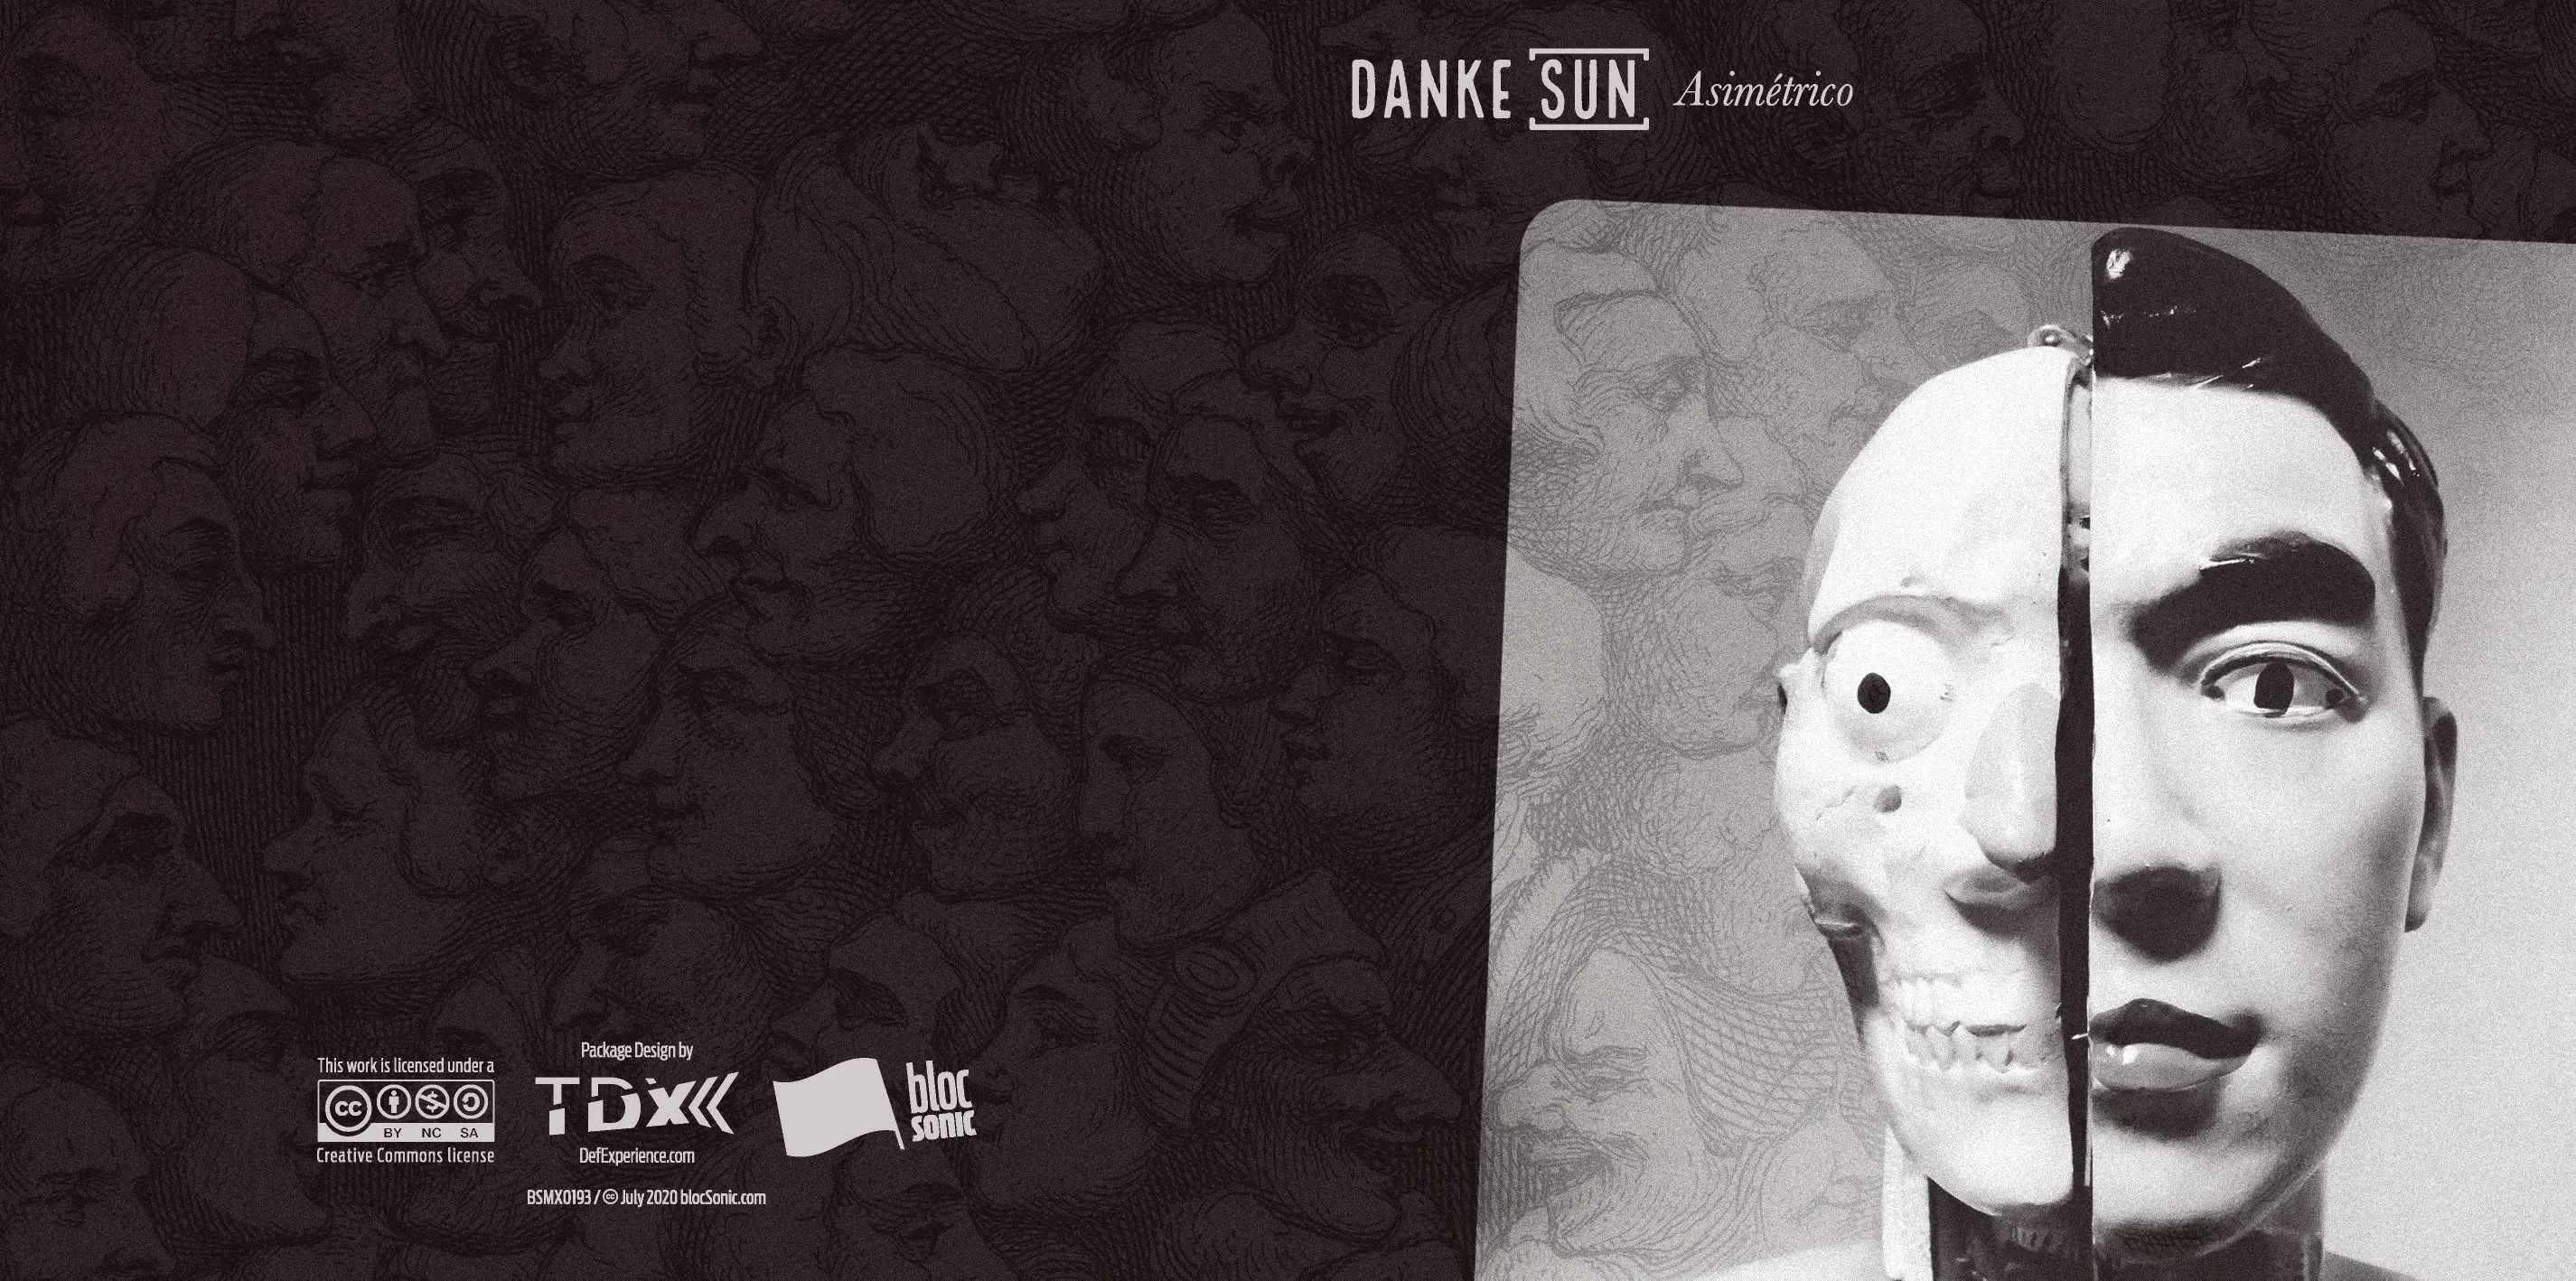 Album insert for “Asimétrico” by Danke Sun